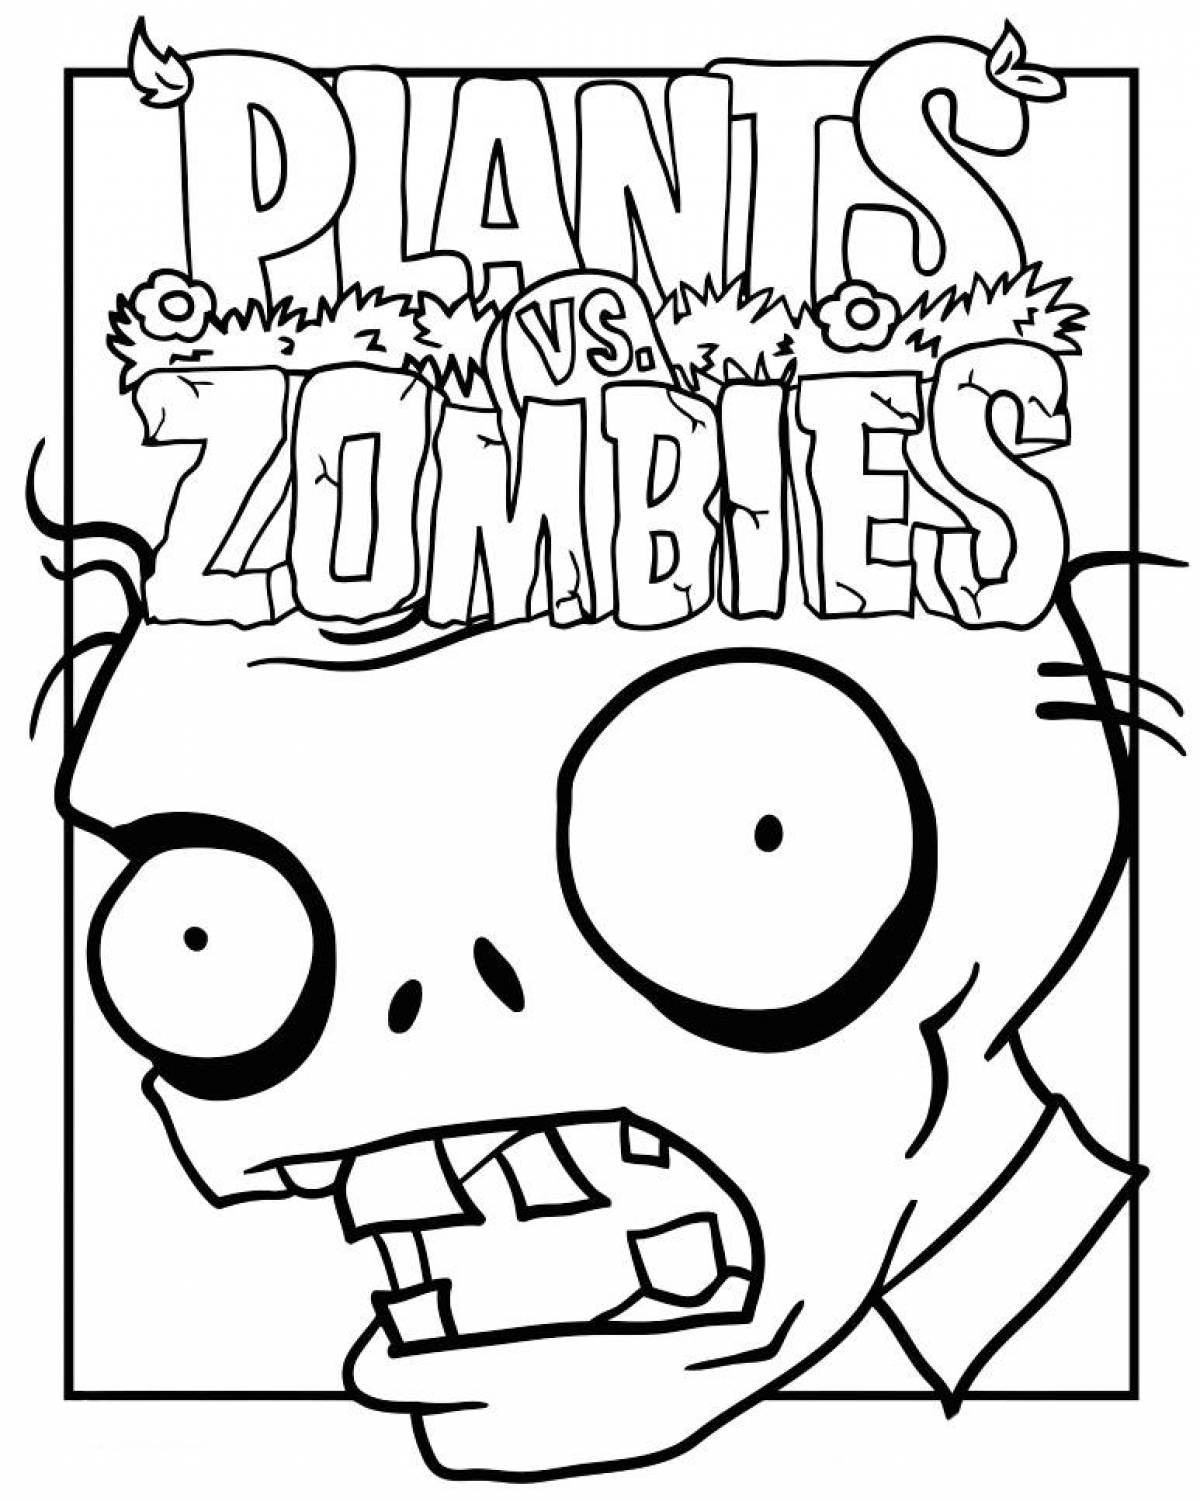 Plants vs. Zombies раскраски Зомбоз